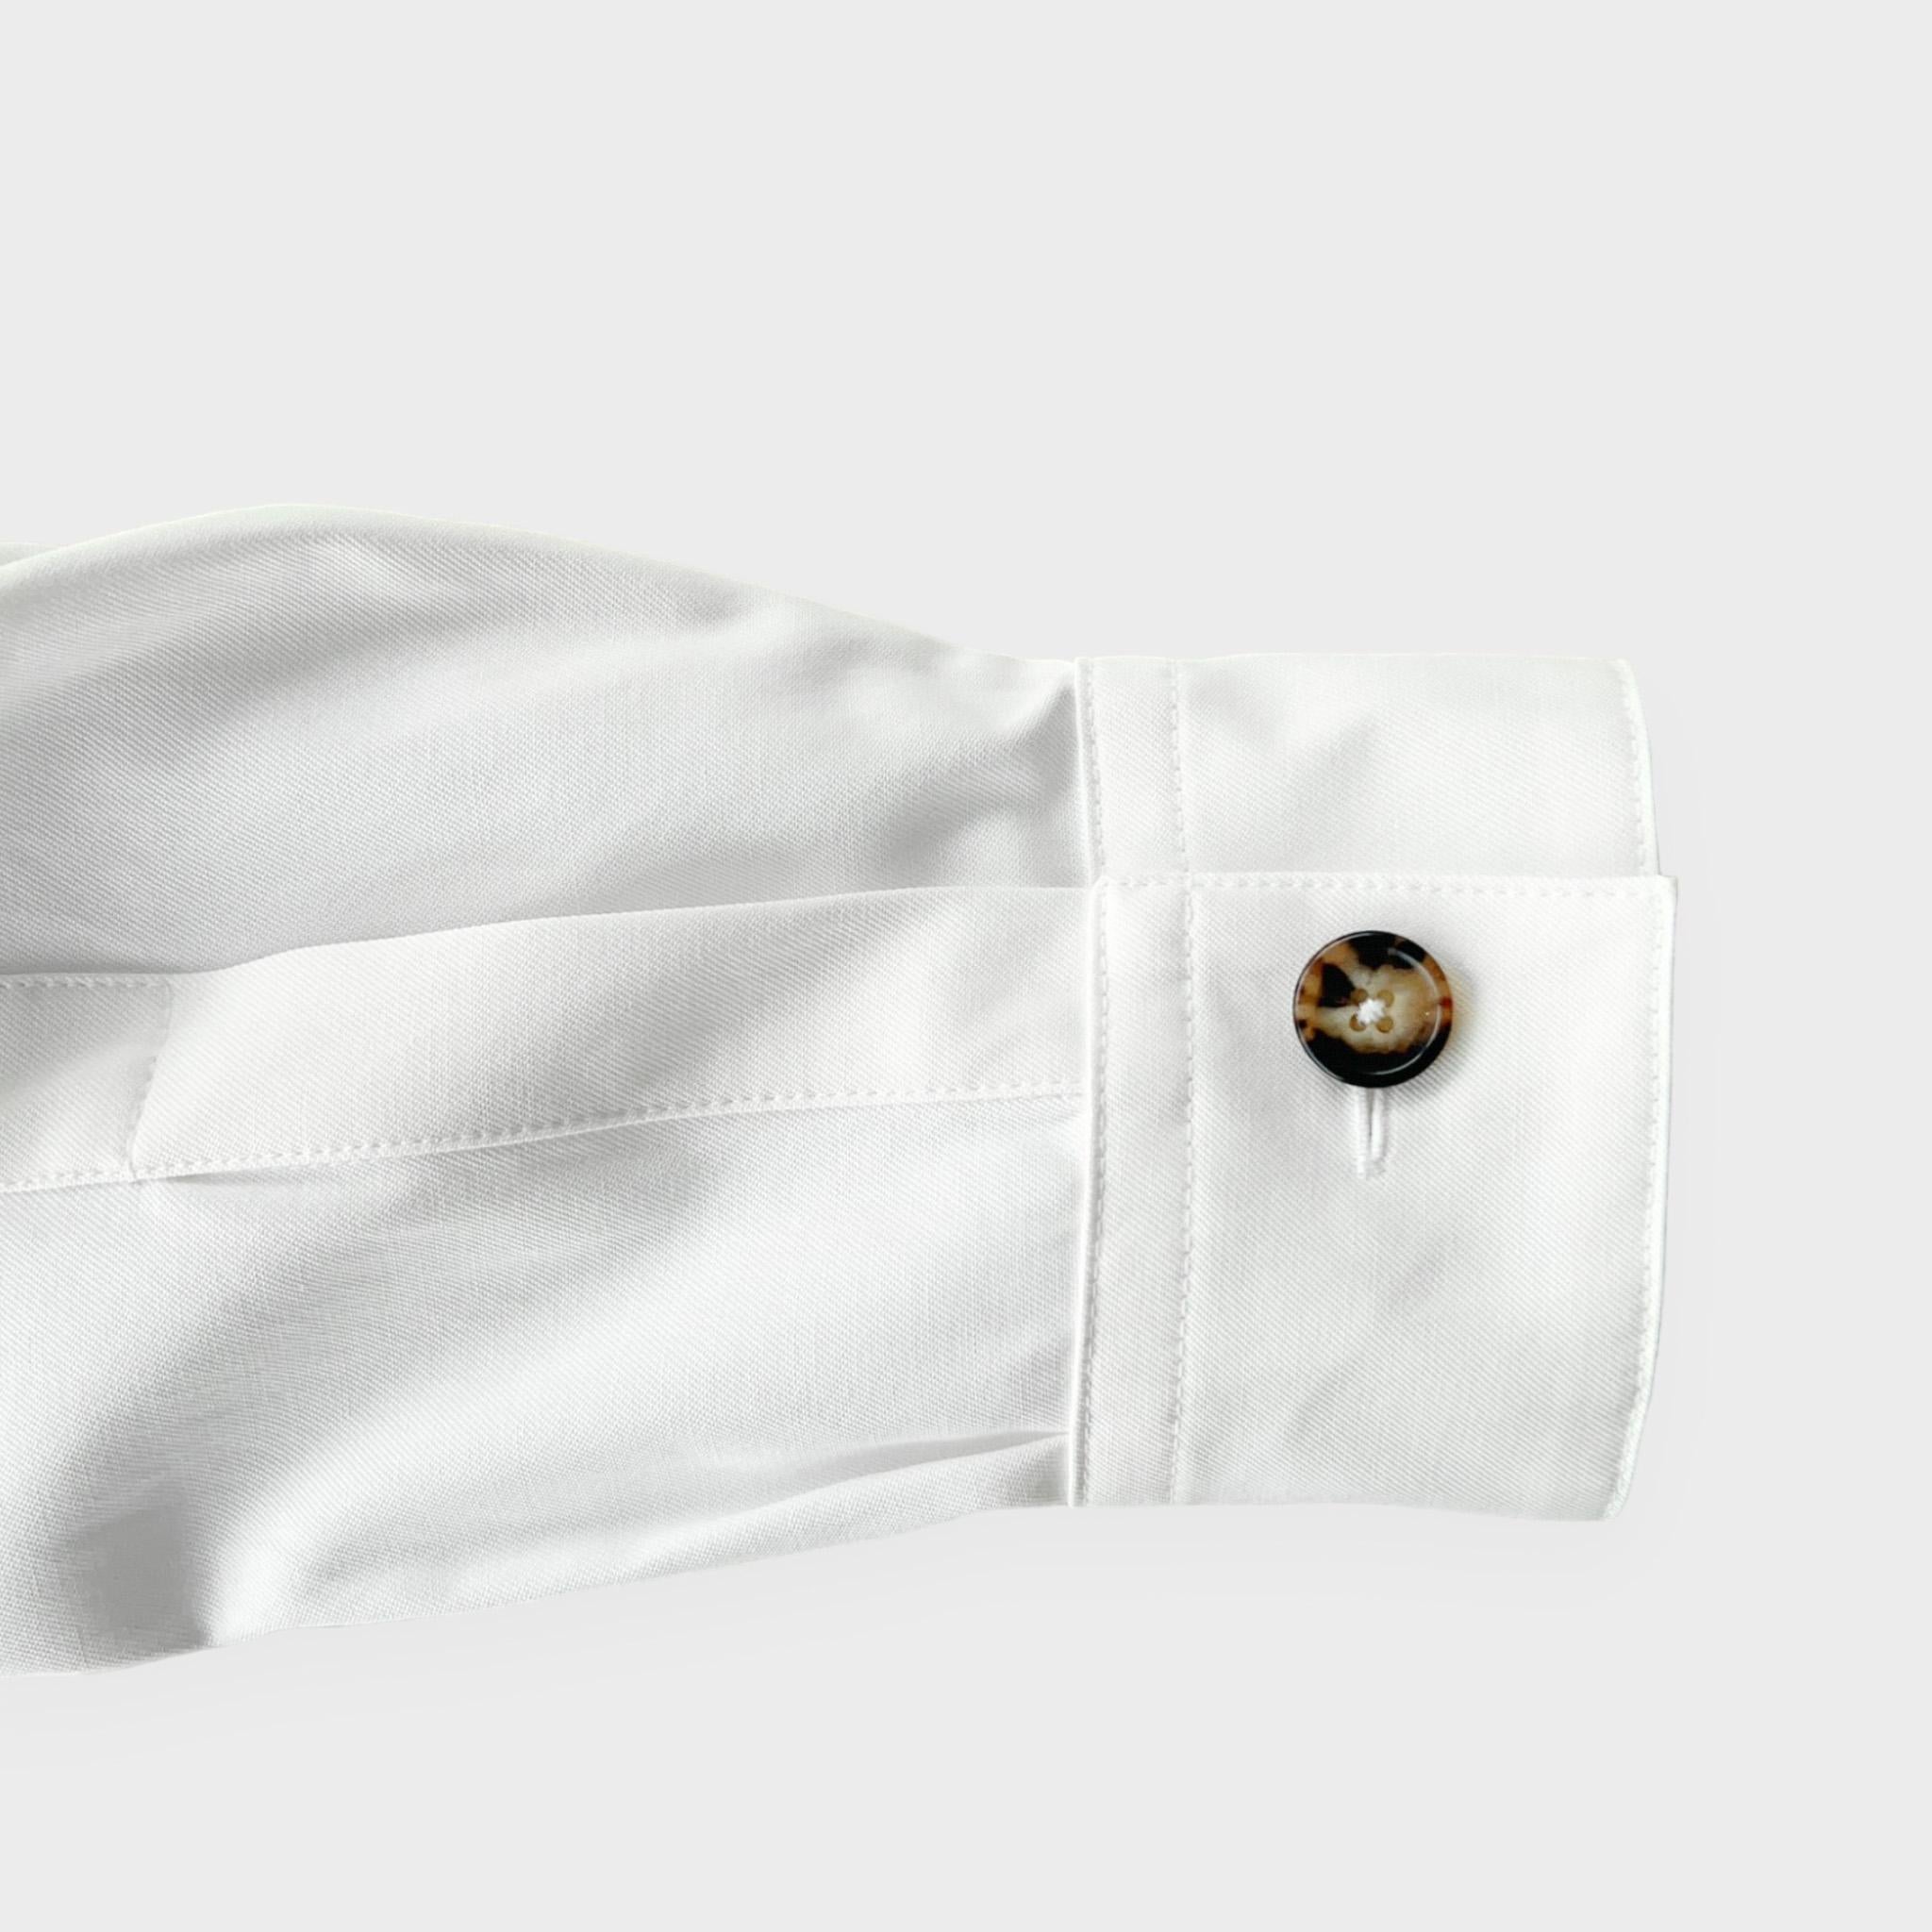 Hermès Men's 'Icones au Carre' Overshirt, White, 48 EU, Medium UK In New Condition For Sale In London, GB